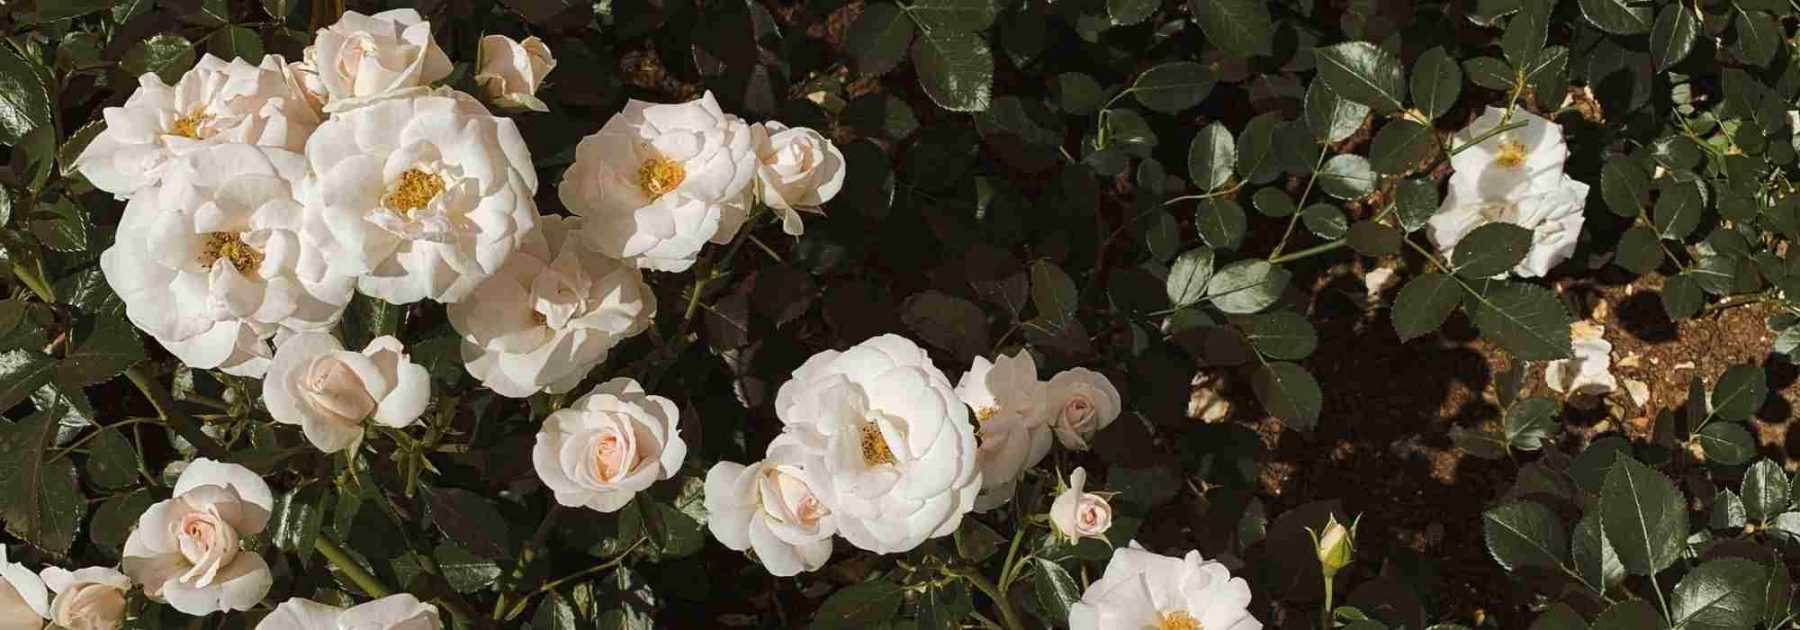 6 rosiers couvre-sol à fleurs blanches